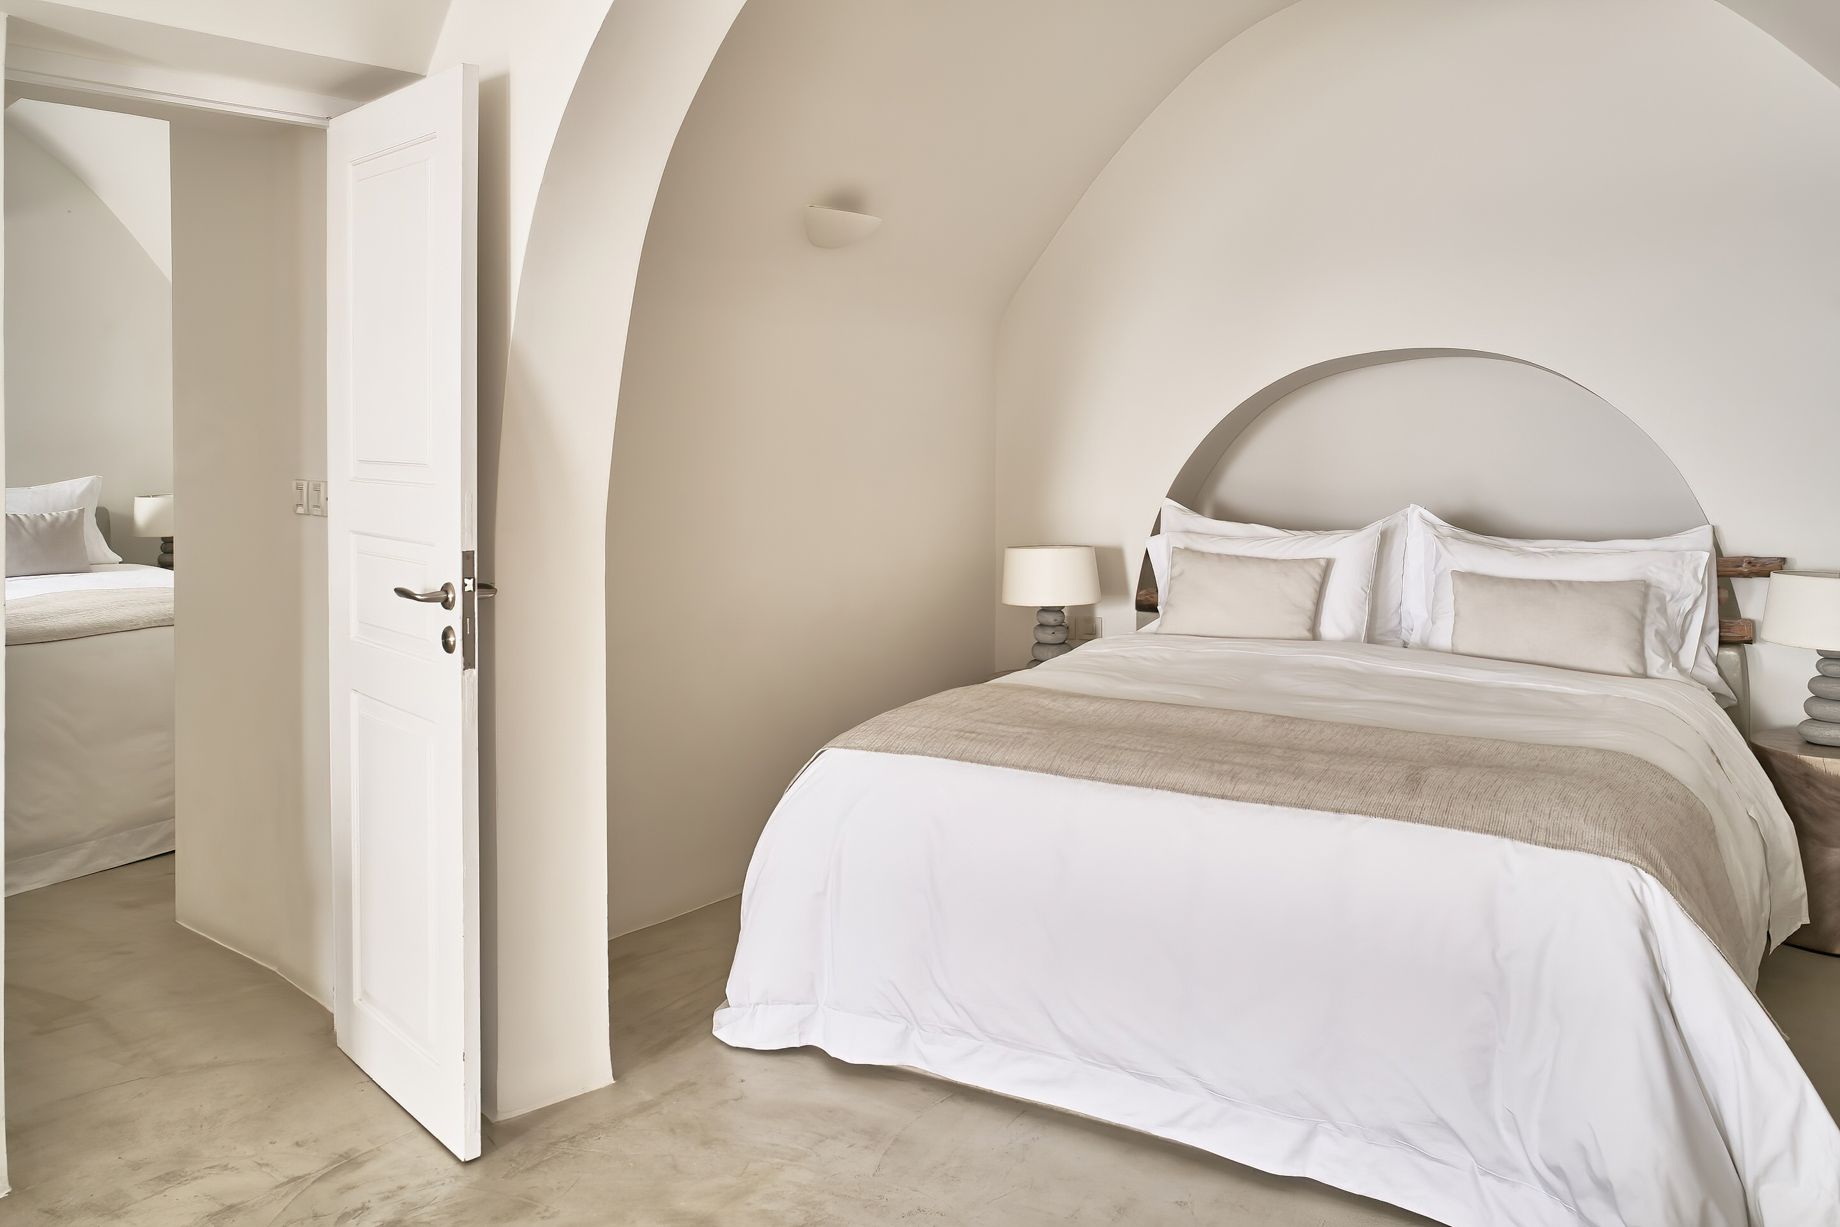 Mystique Hotel Santorini – Oia, Santorini Island, Greece - All2Senses Suite